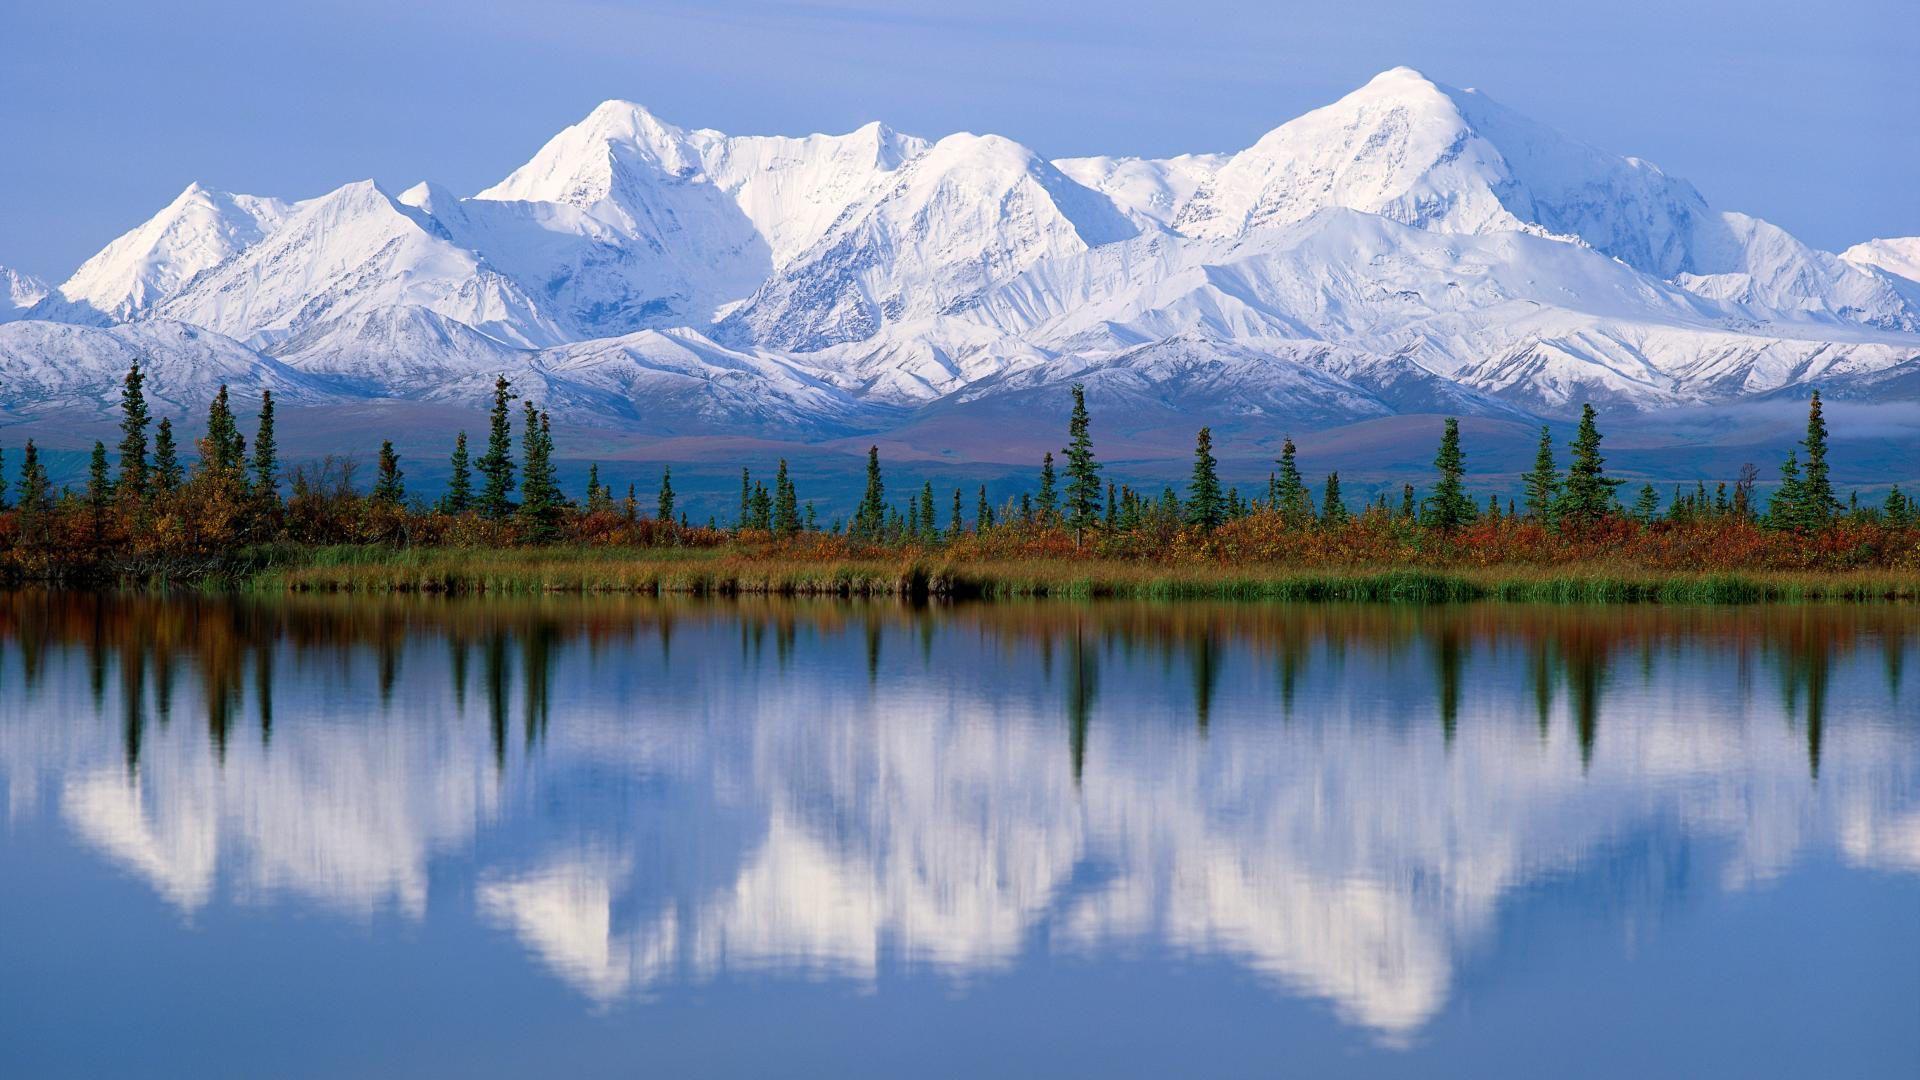 Alaska HD Wallpaper. Alaska Background Image Free